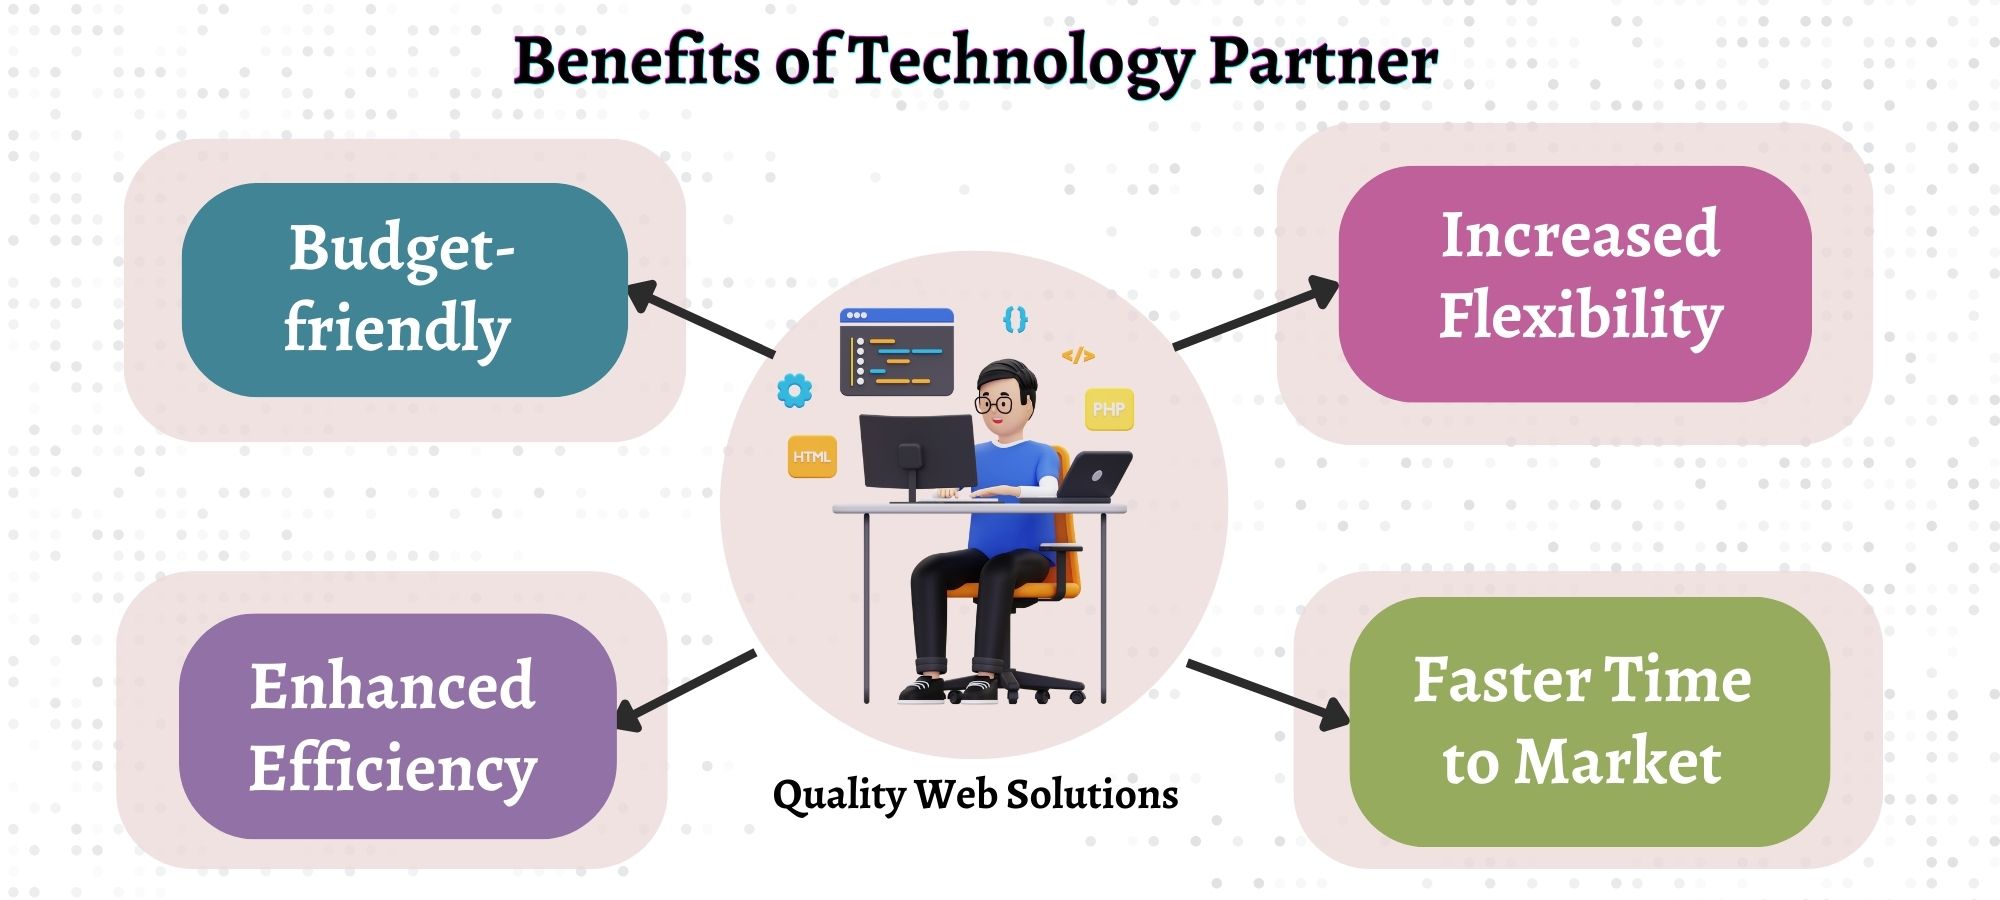 Benefits of Technology Partner